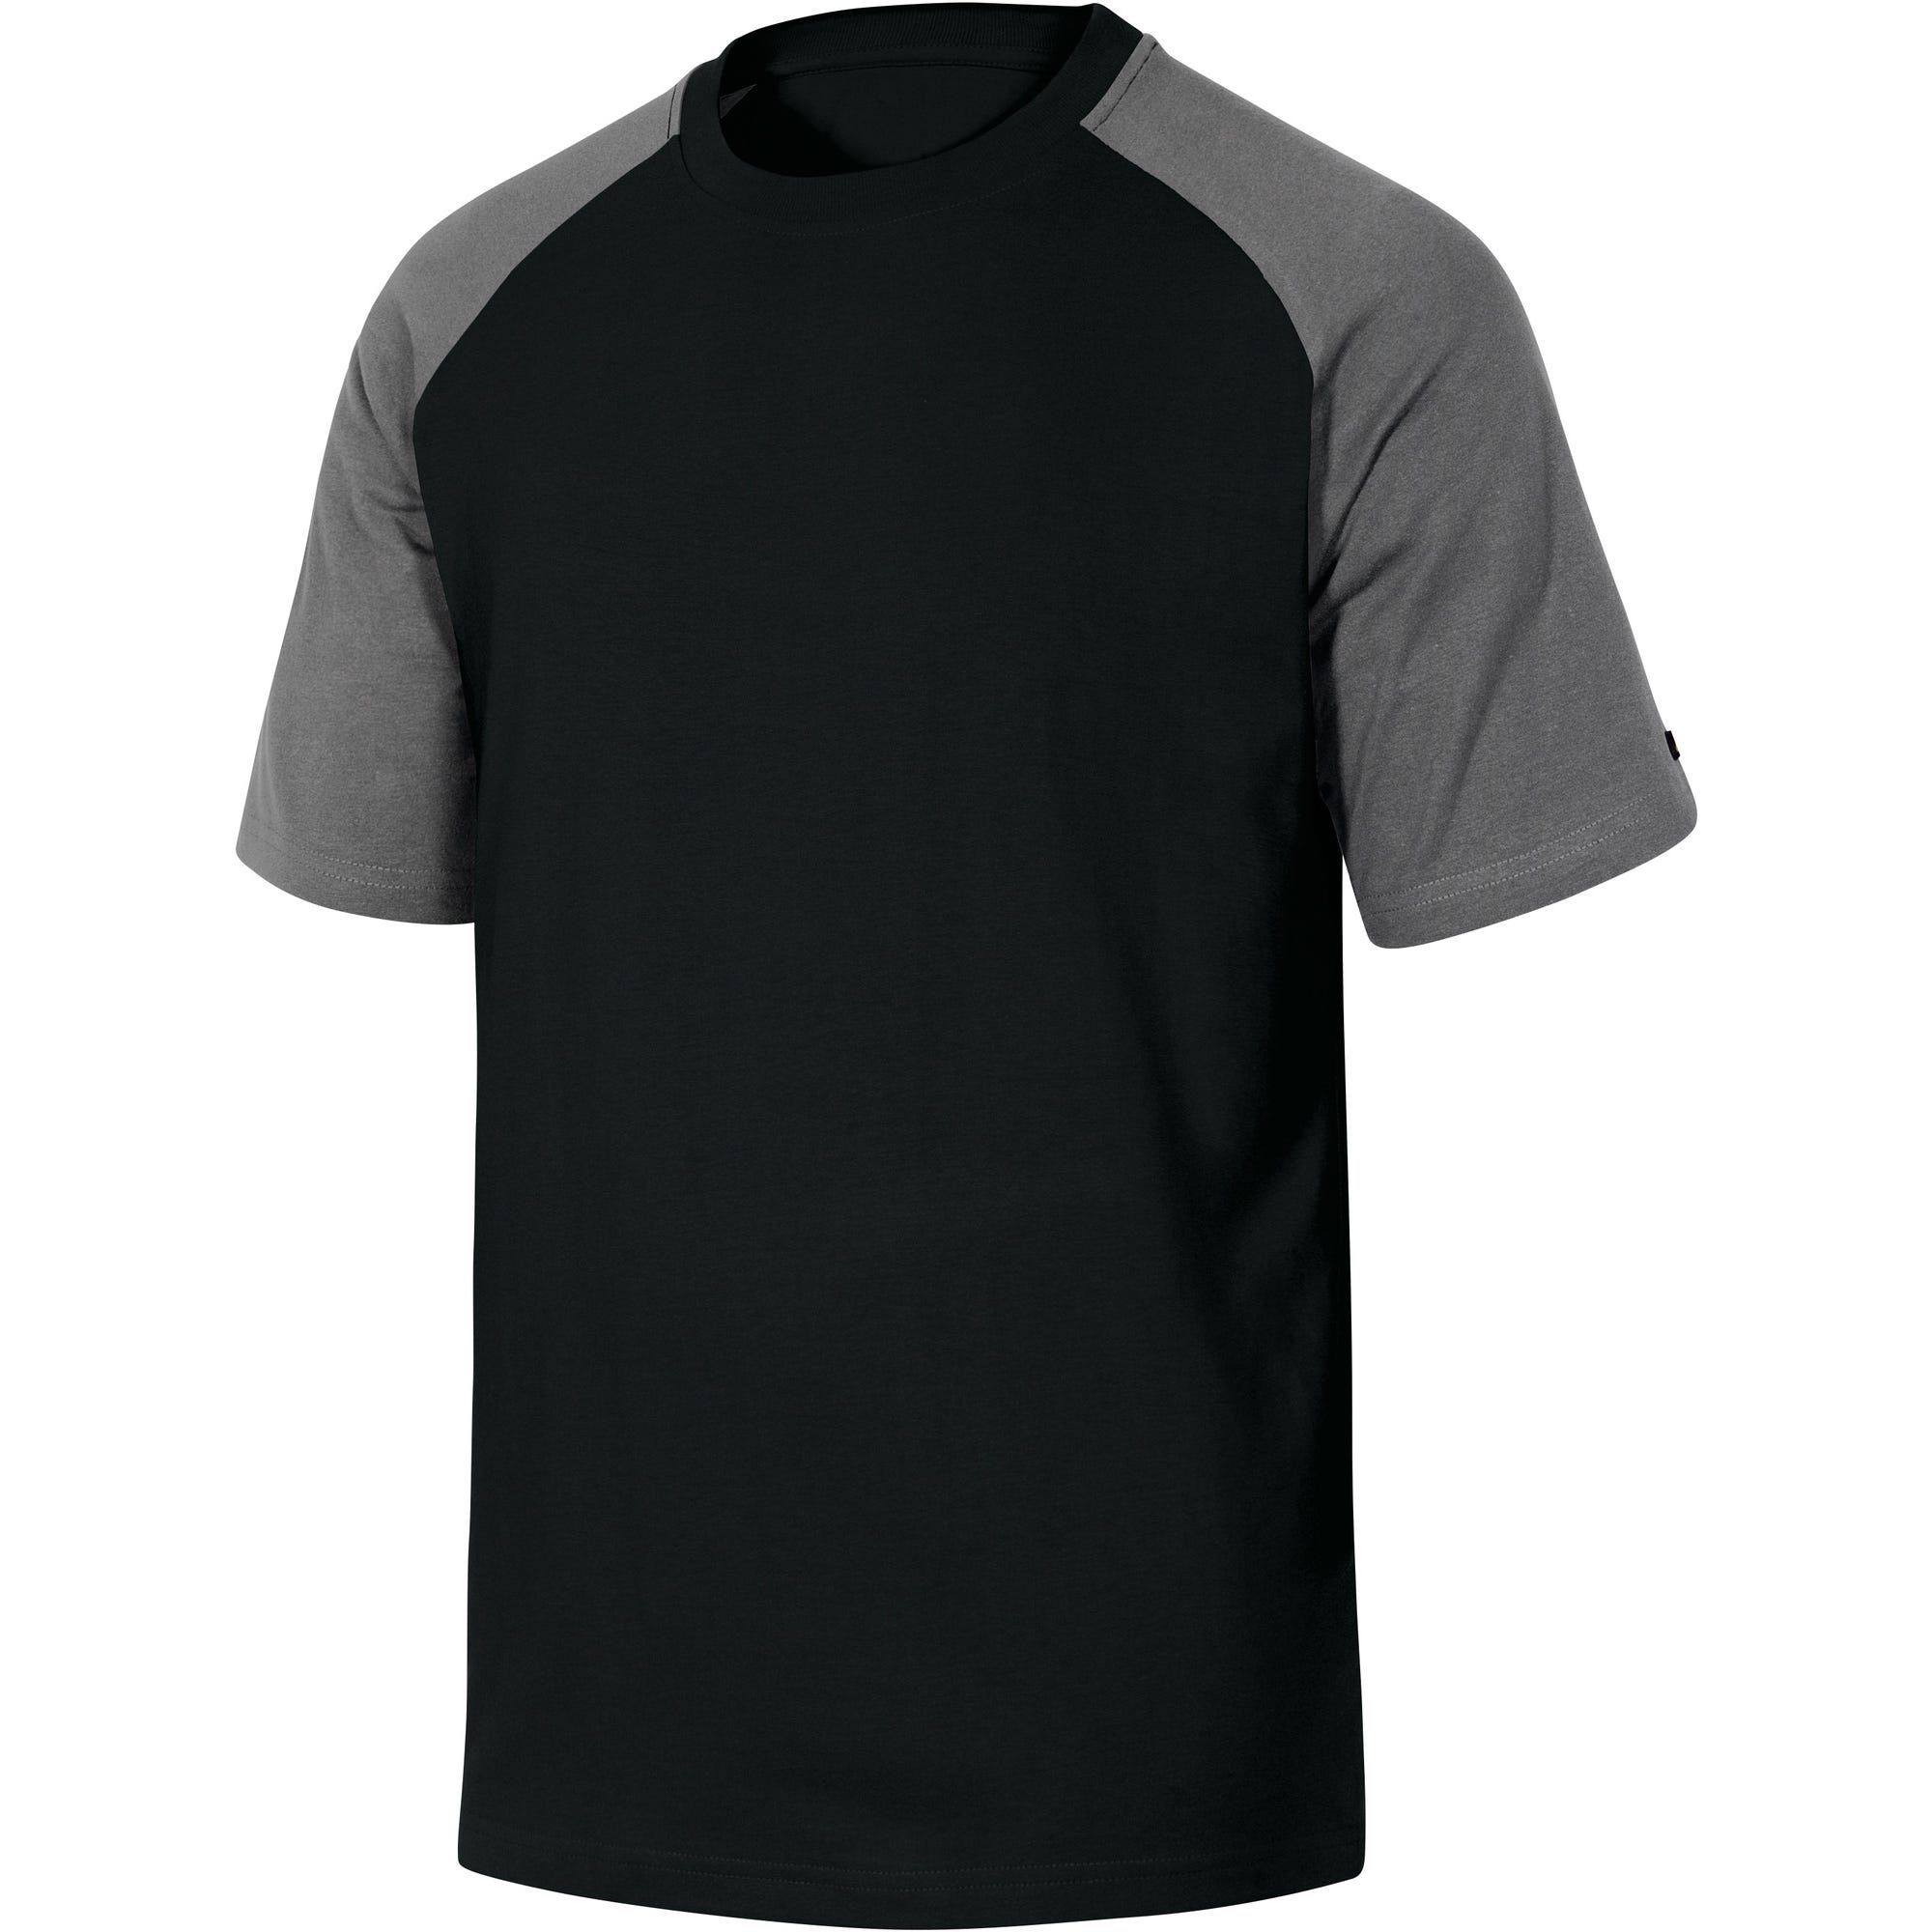 Tee-shirt noir / gris T.XXL Mach Spring - DELTA PLUS 0